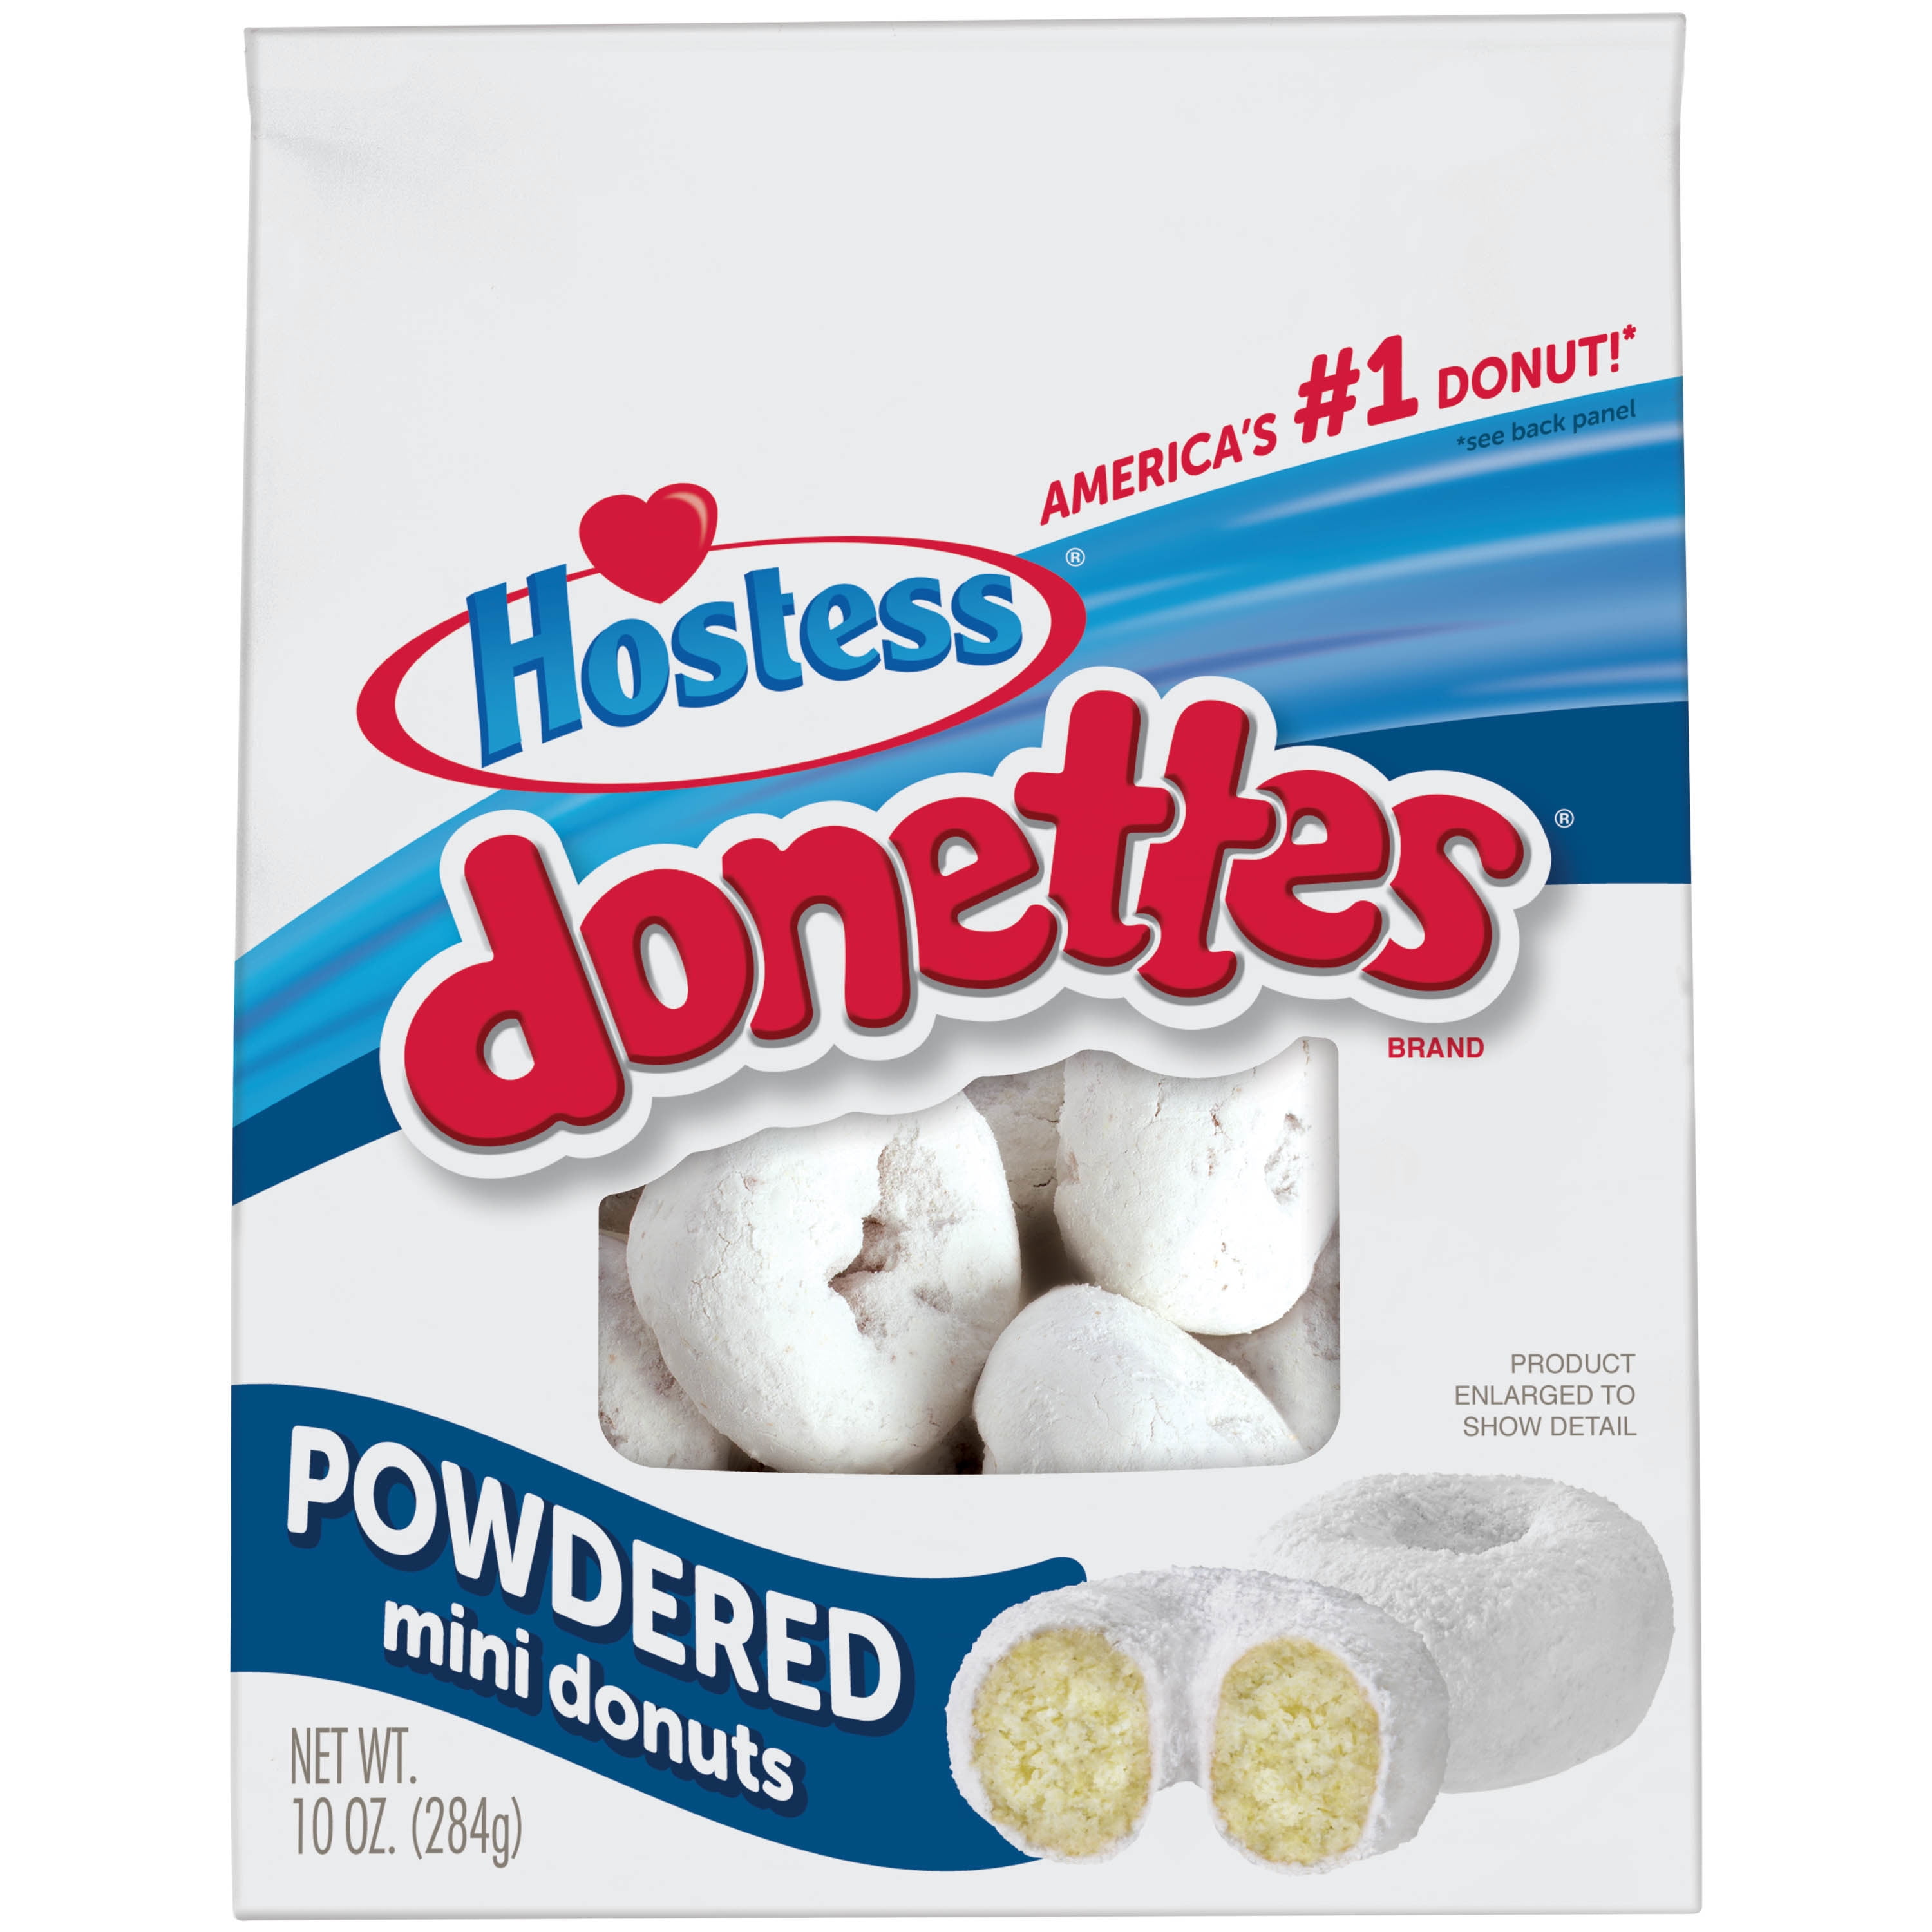 Hostess Powdered Donettes Bag